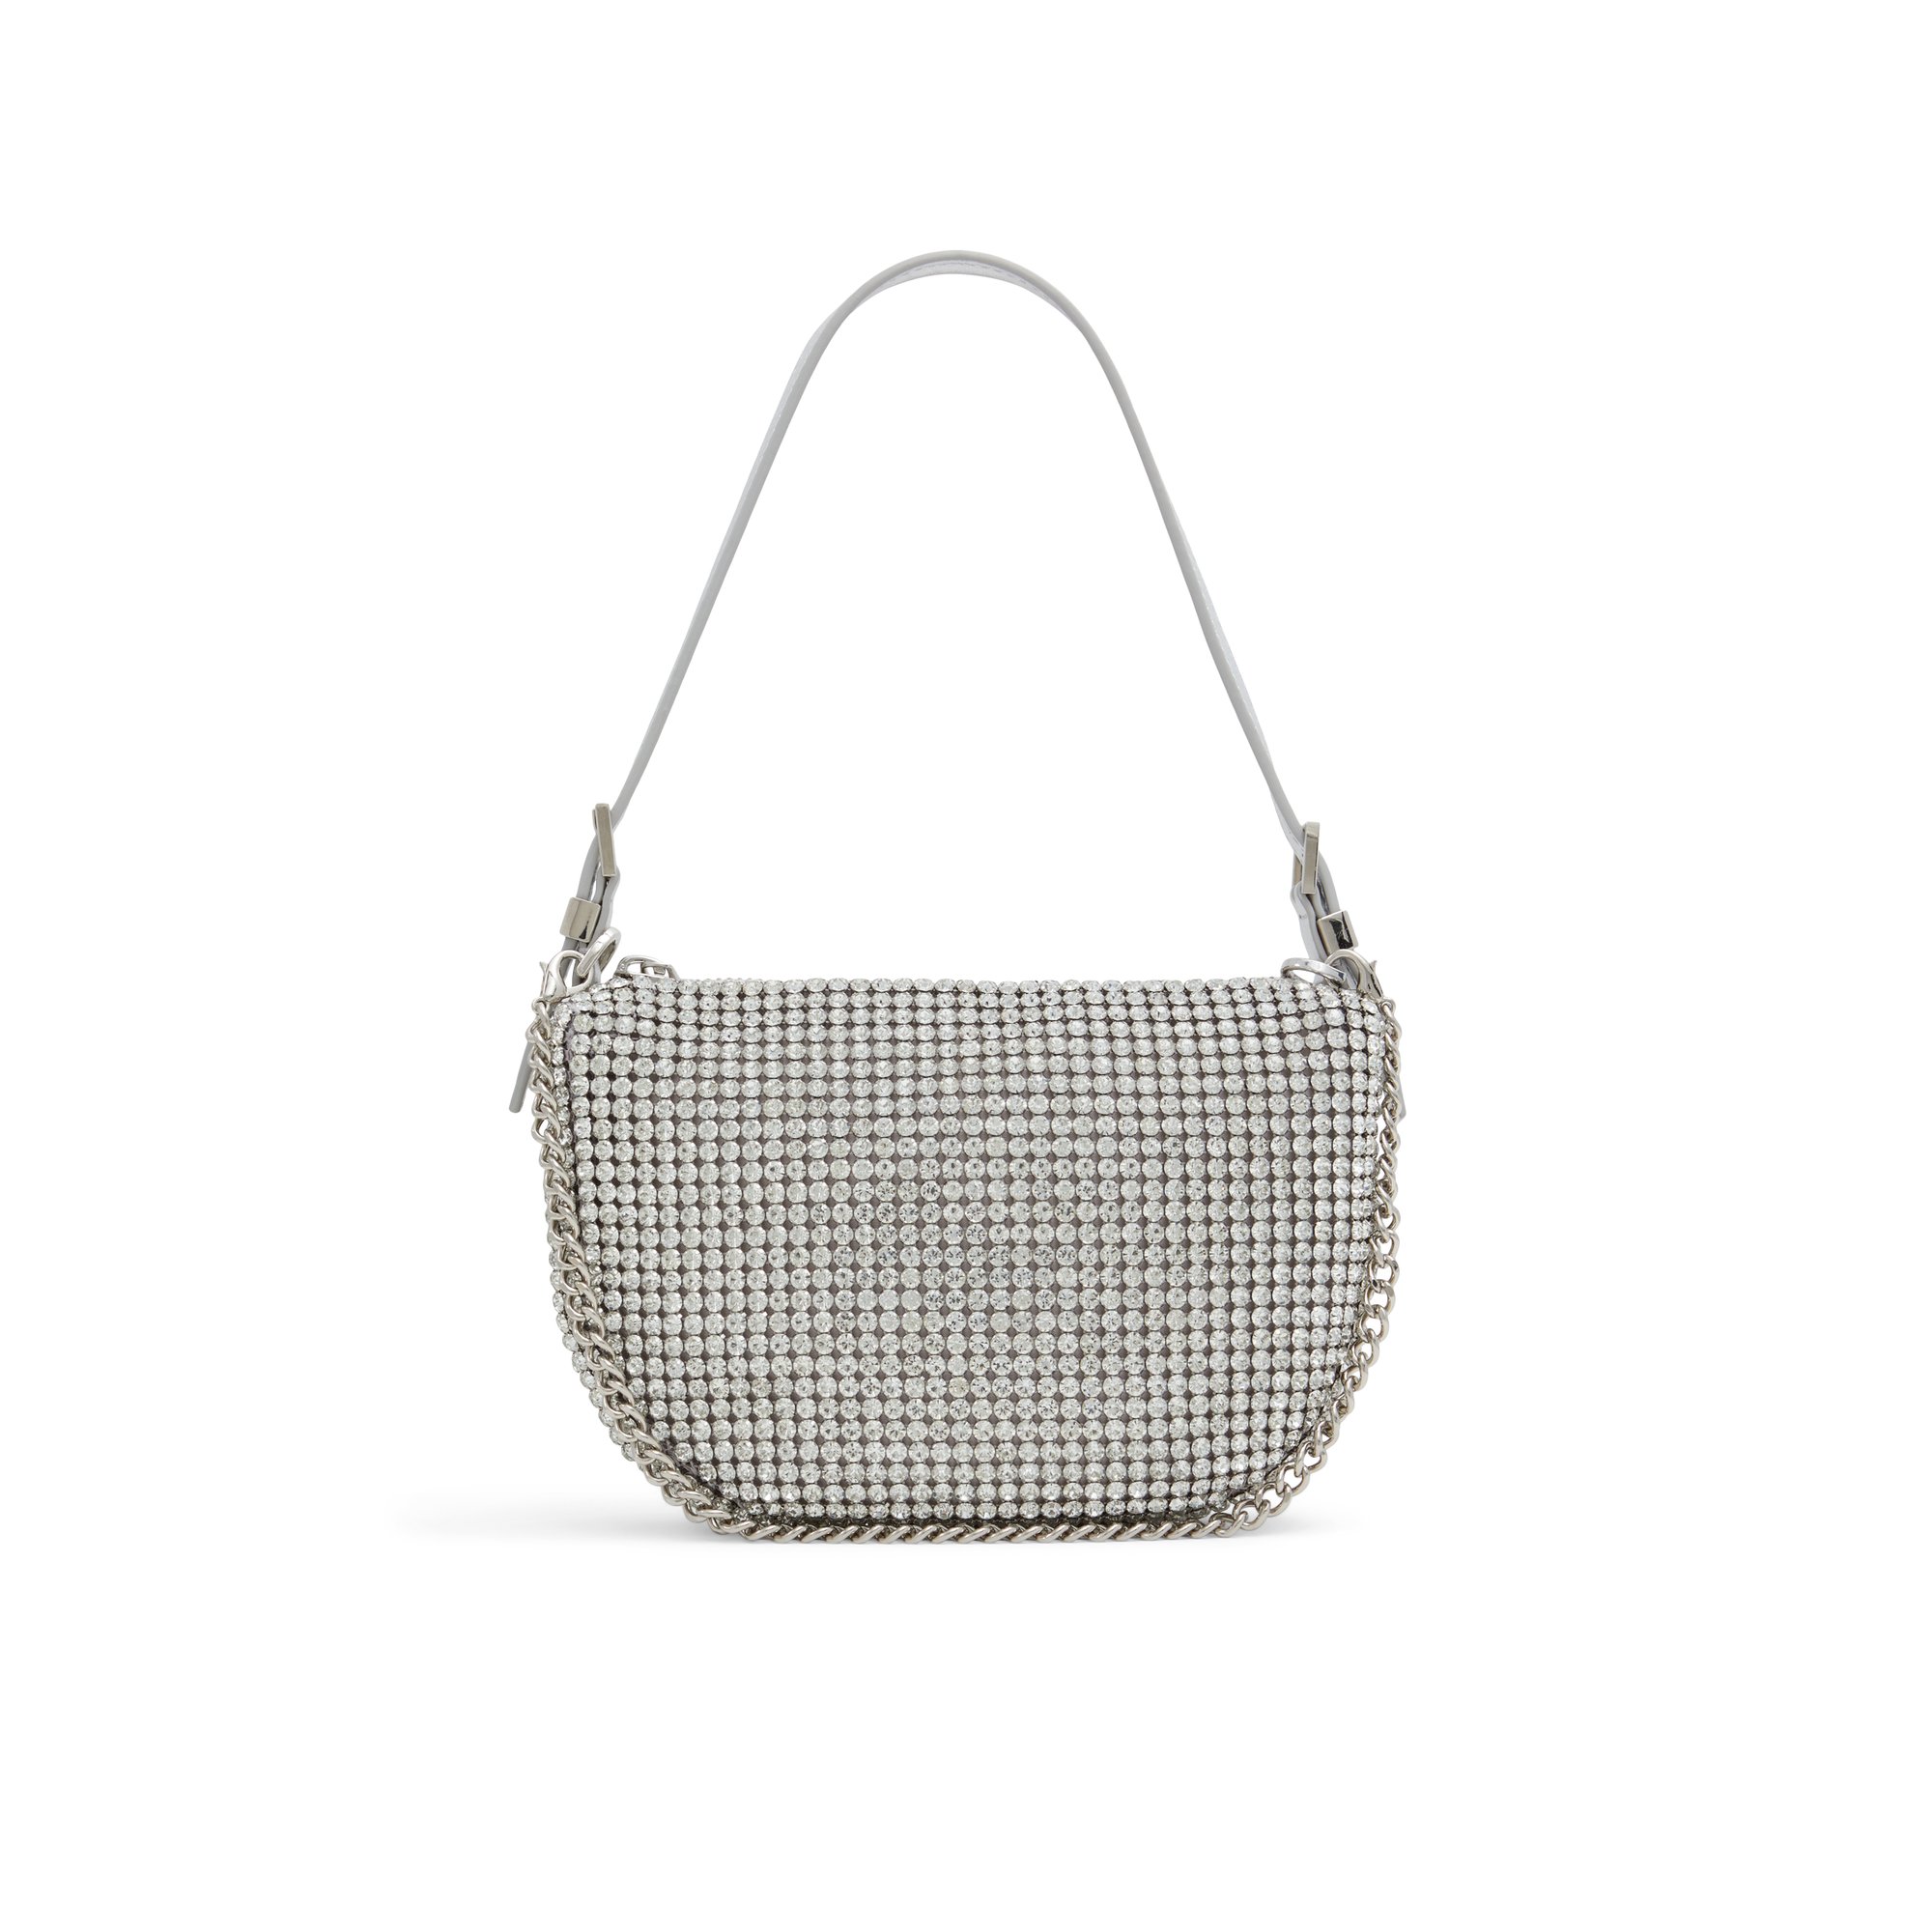 ALDO Misterax - Women's Shoulder Bag Handbag - Silver